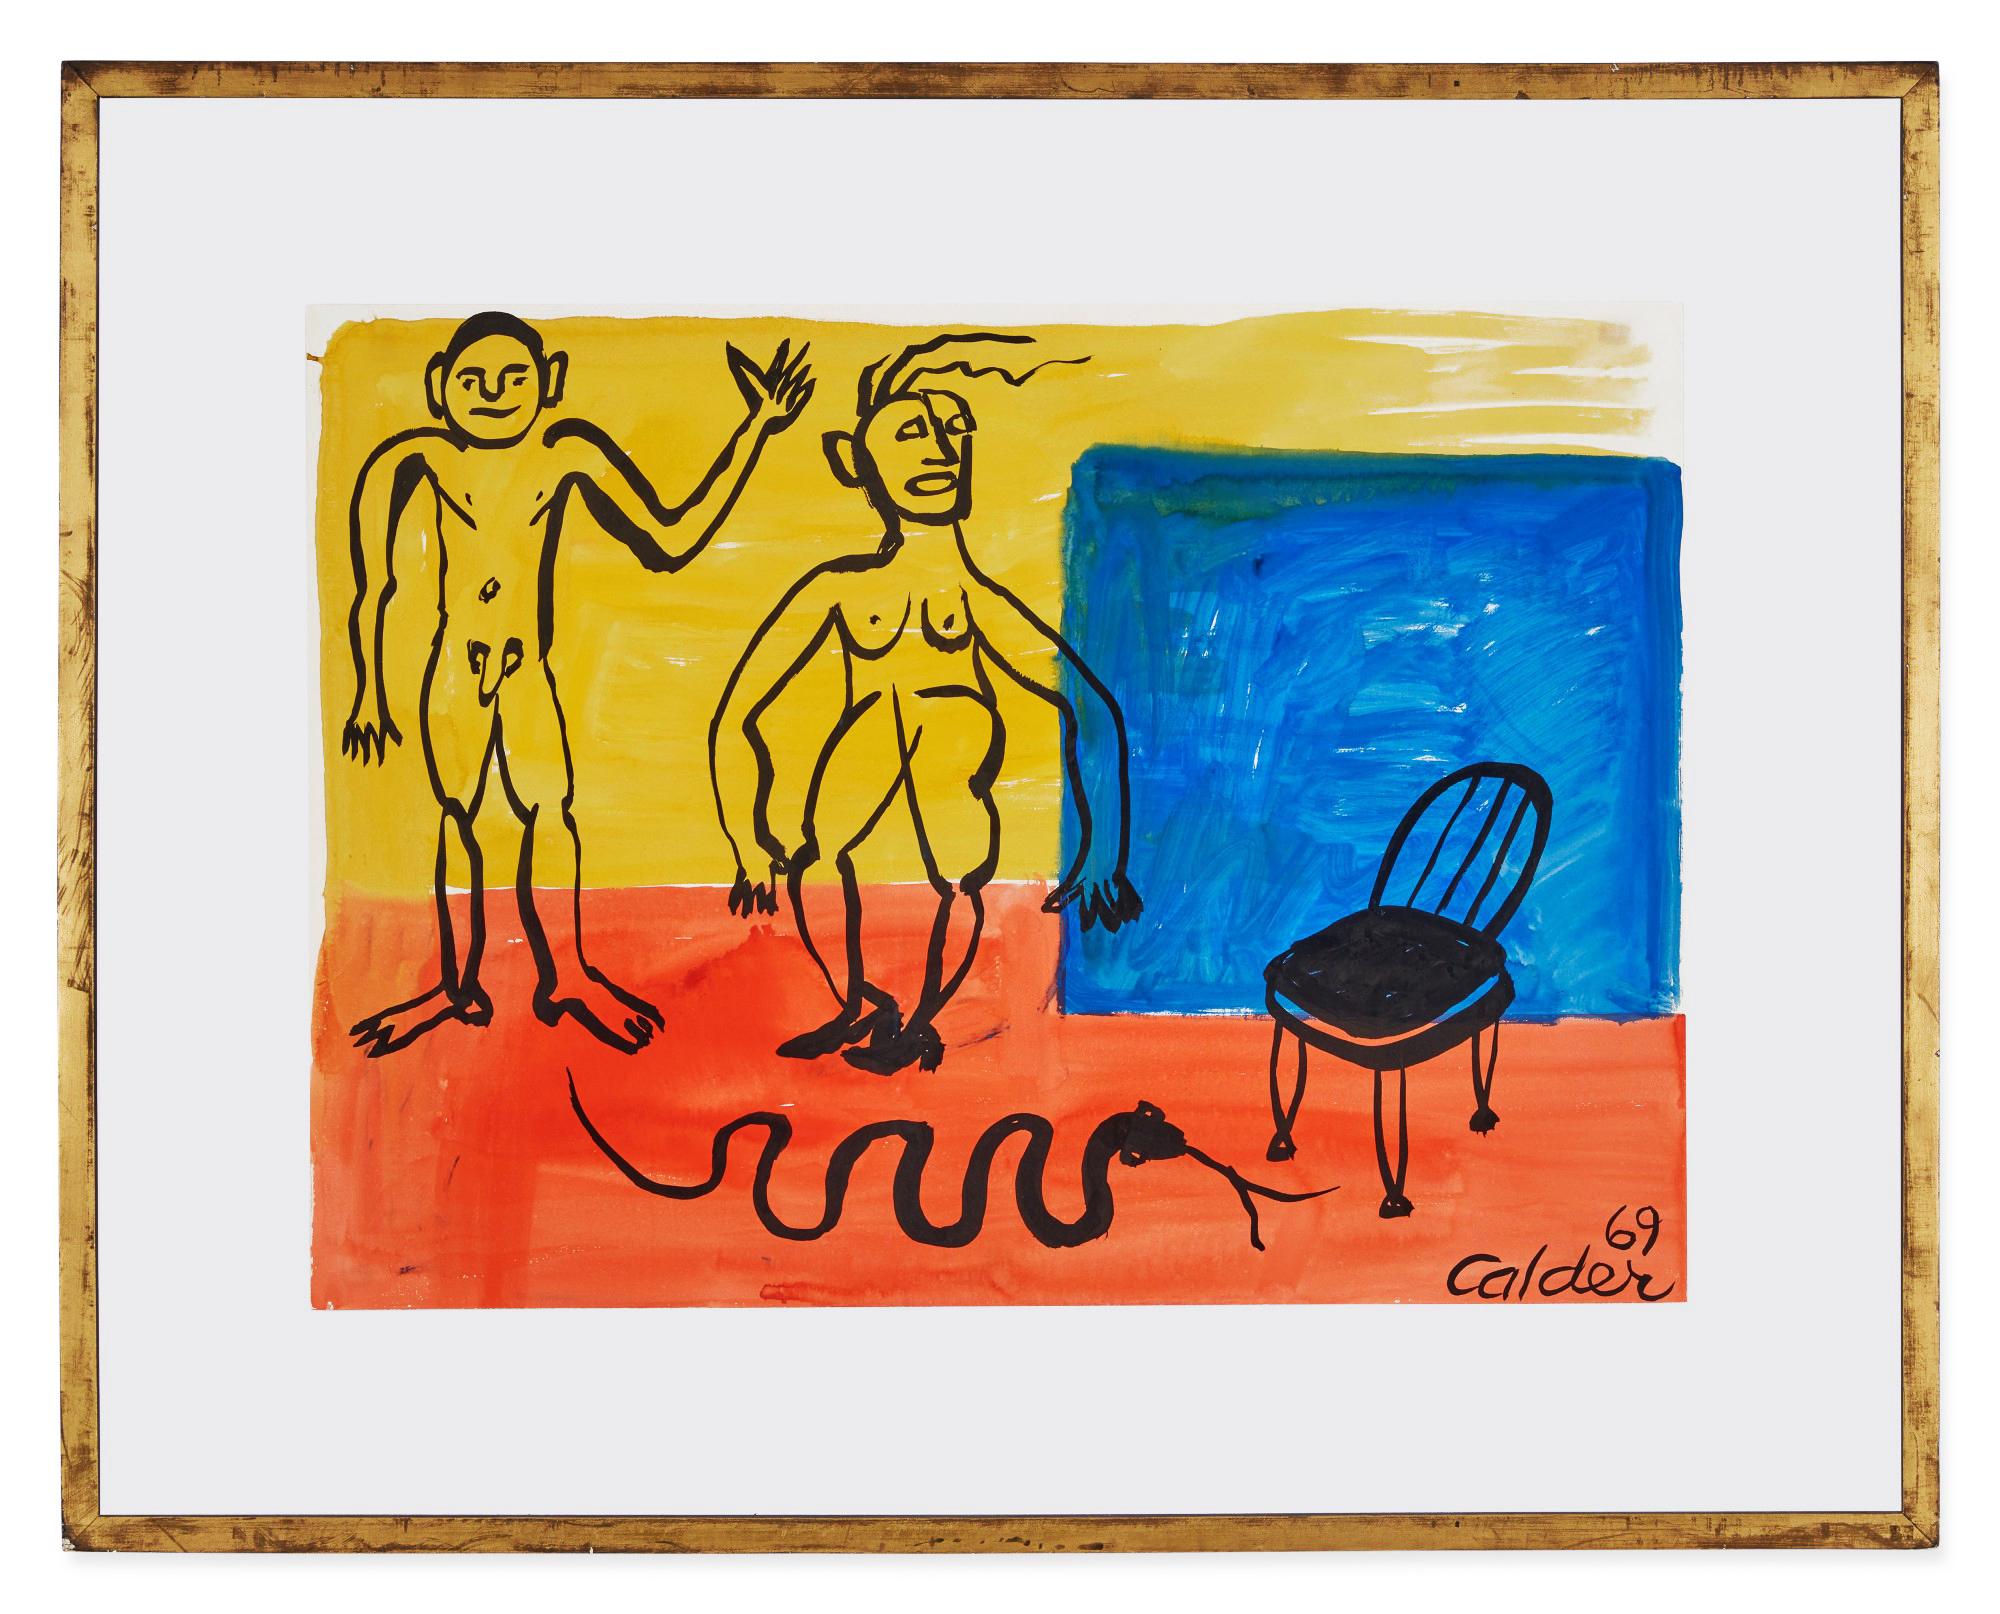 SCHWARZER STUHL (ORIGINAL-GOUACHE) (Surrealismus), Mixed Media Art, von Alexander Calder